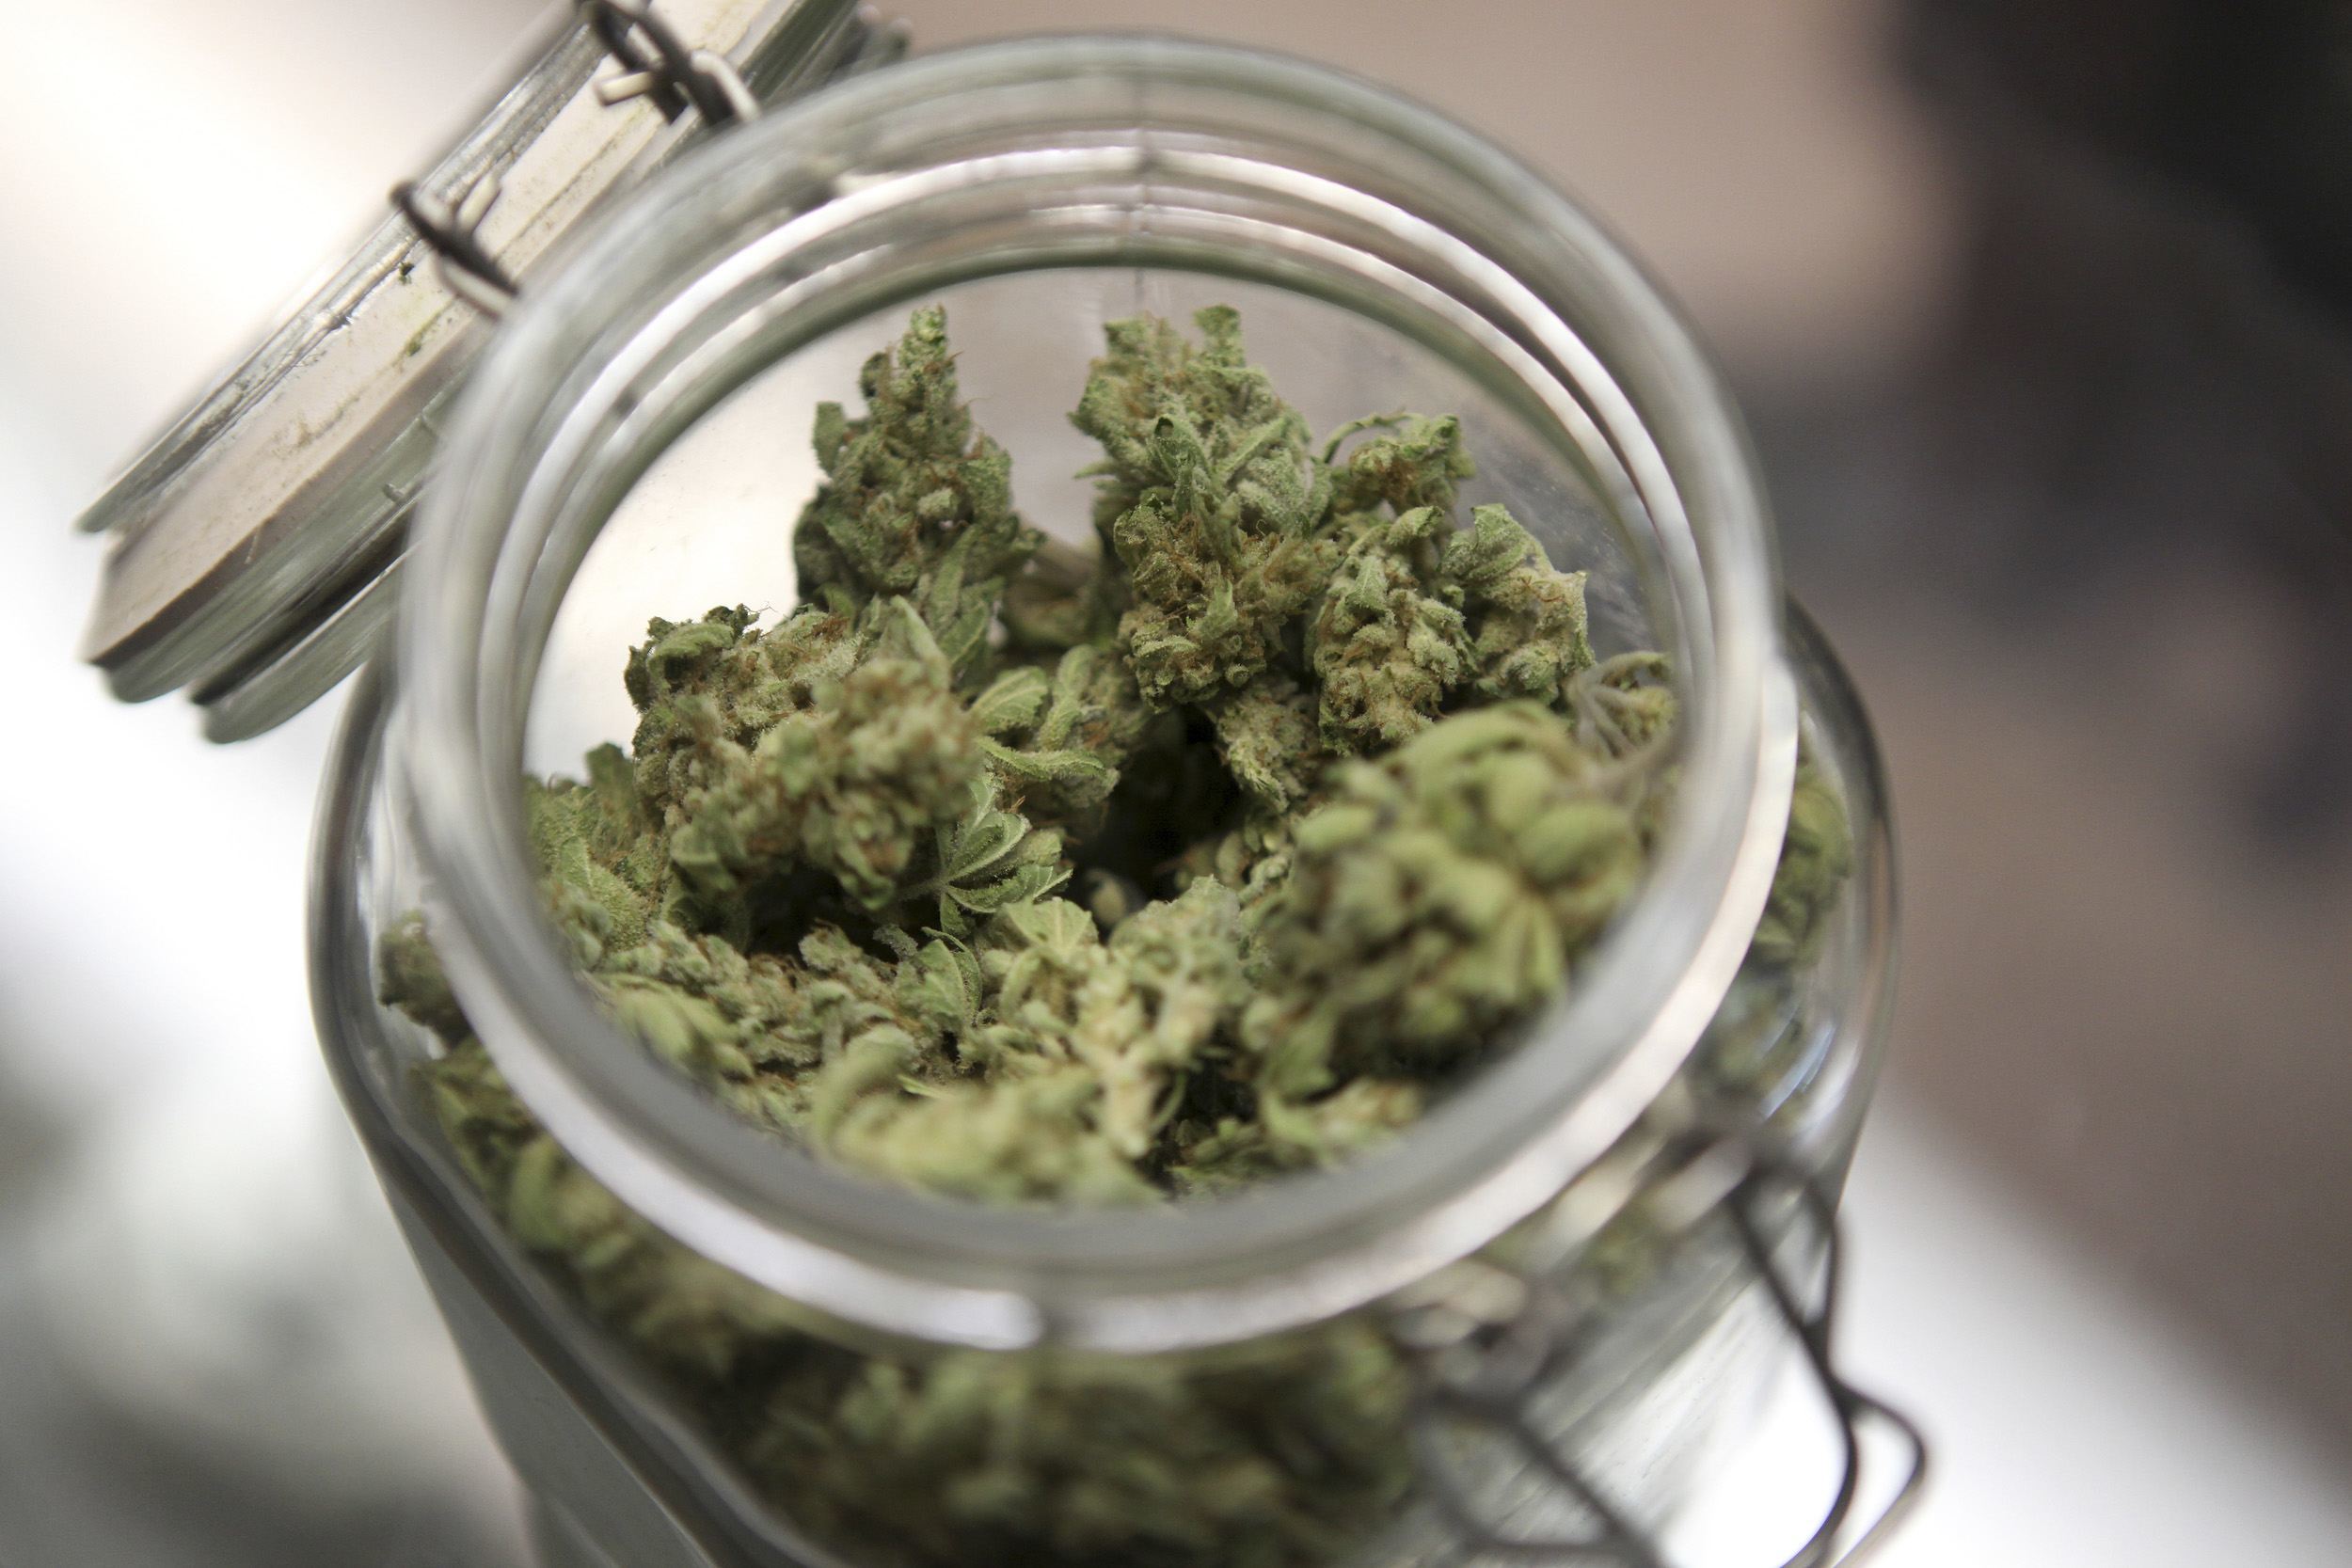 Image of medical marijuana in a stash jar.